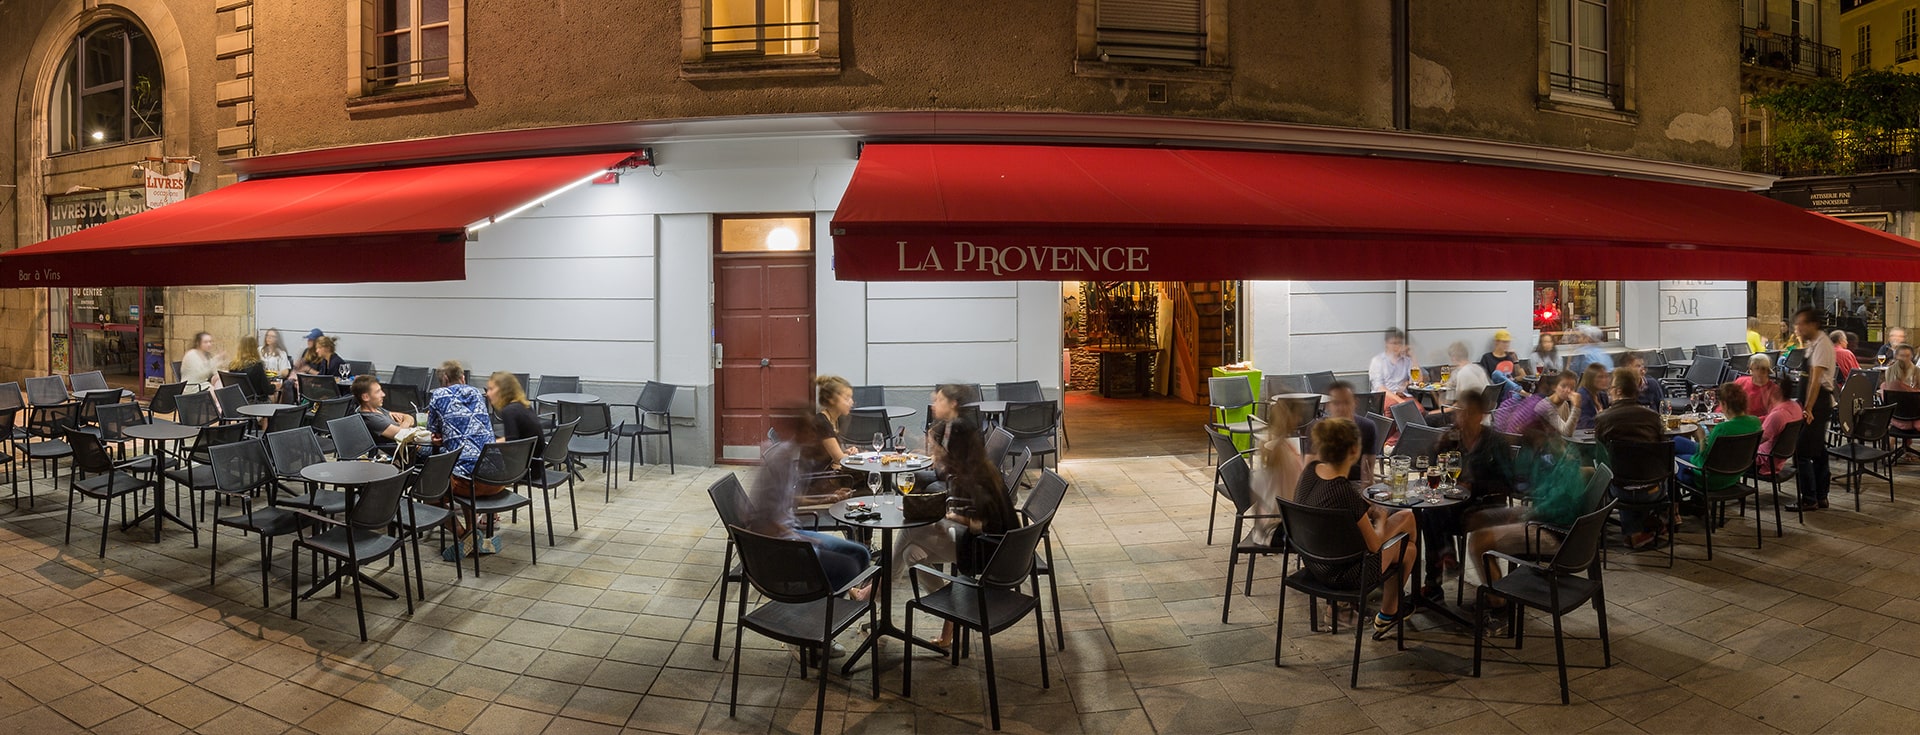 Store Banne Madrid - Bar La Provence à Nantes (44) par Espacio